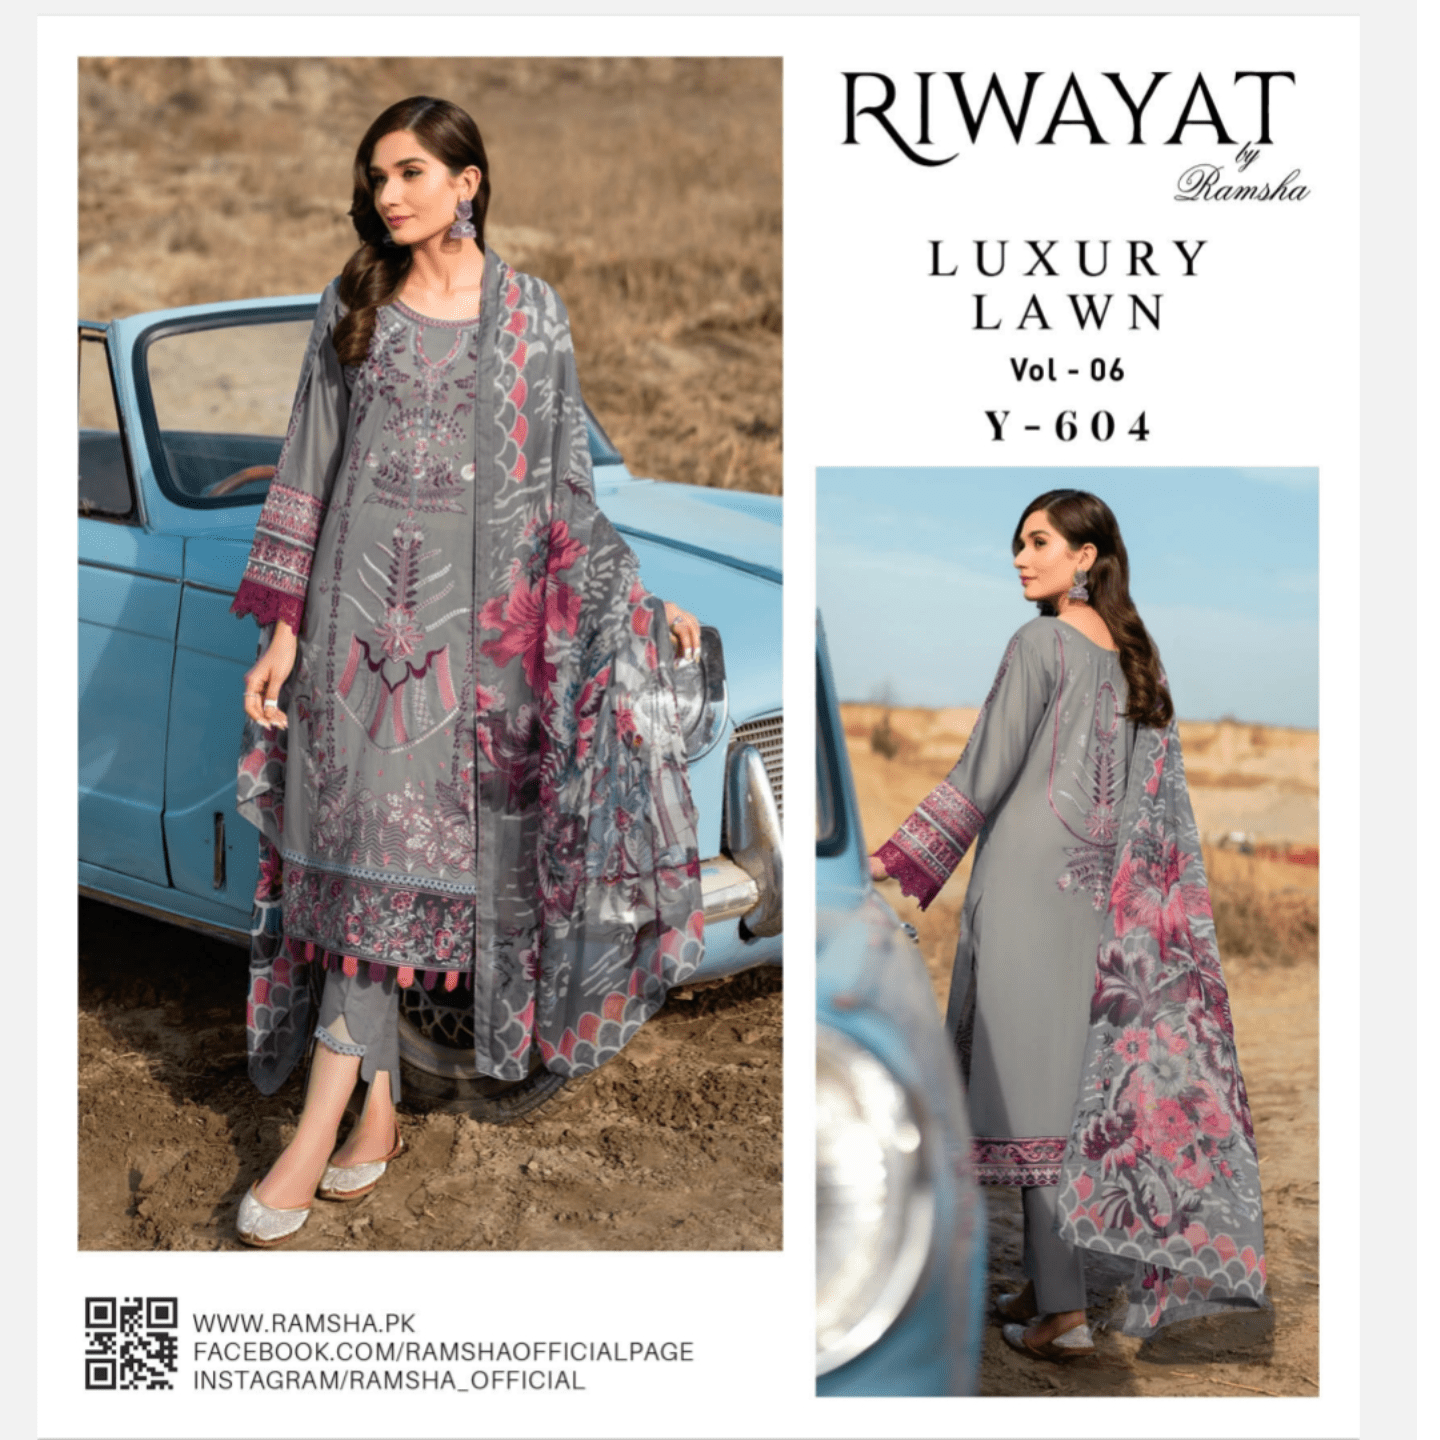 Riwayat luxury Lawn Vol 06 "23"